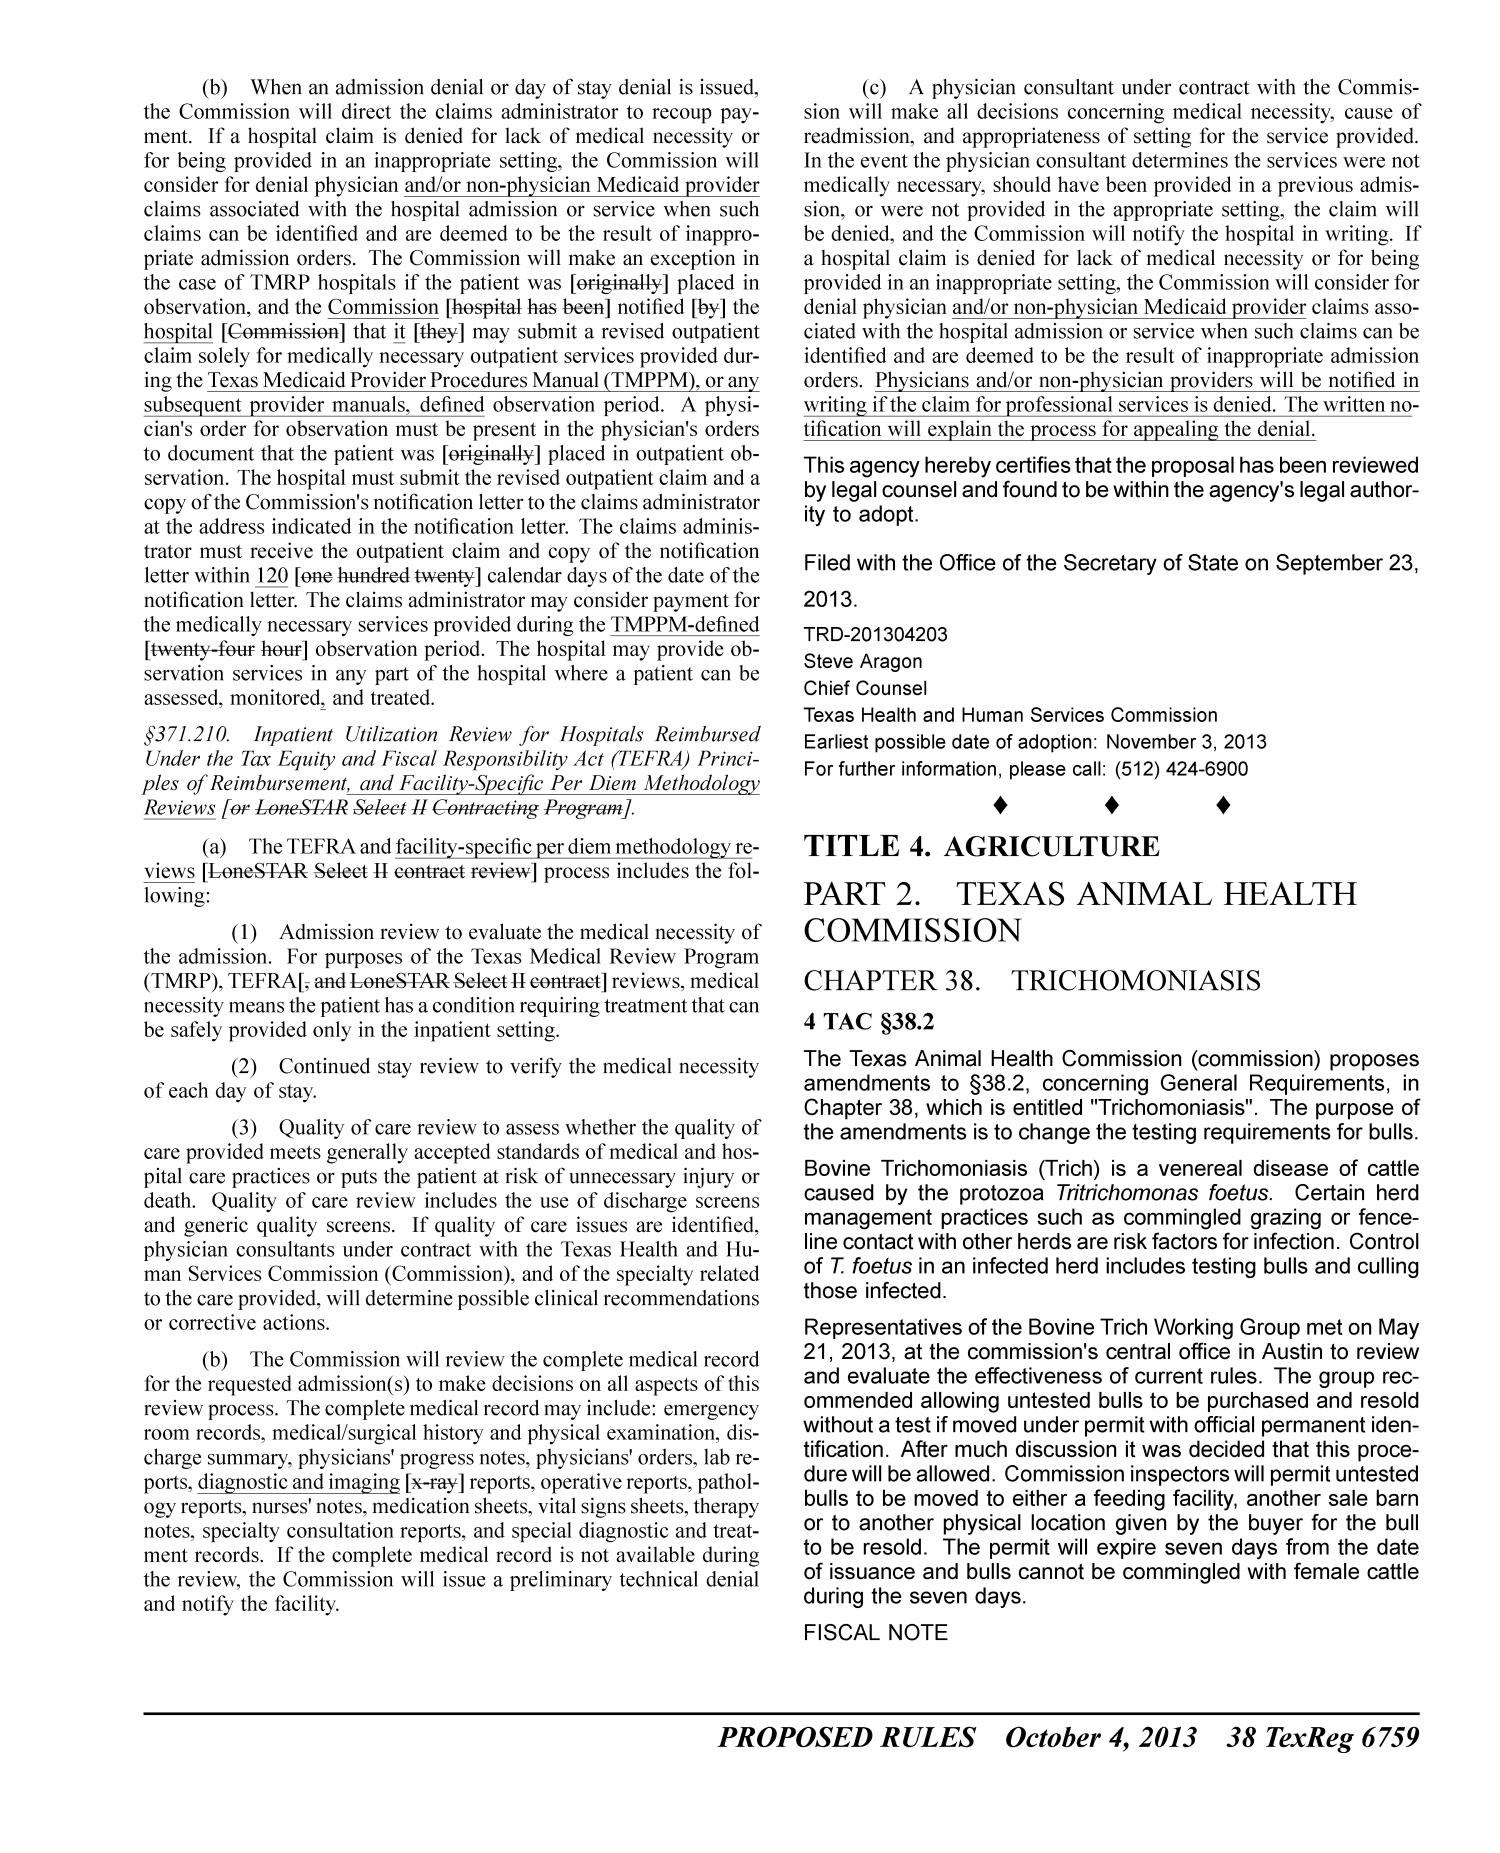 Texas Register, Volume 38, Number 40, Pages 6747-6996, October 4, 2013
                                                
                                                    6759
                                                